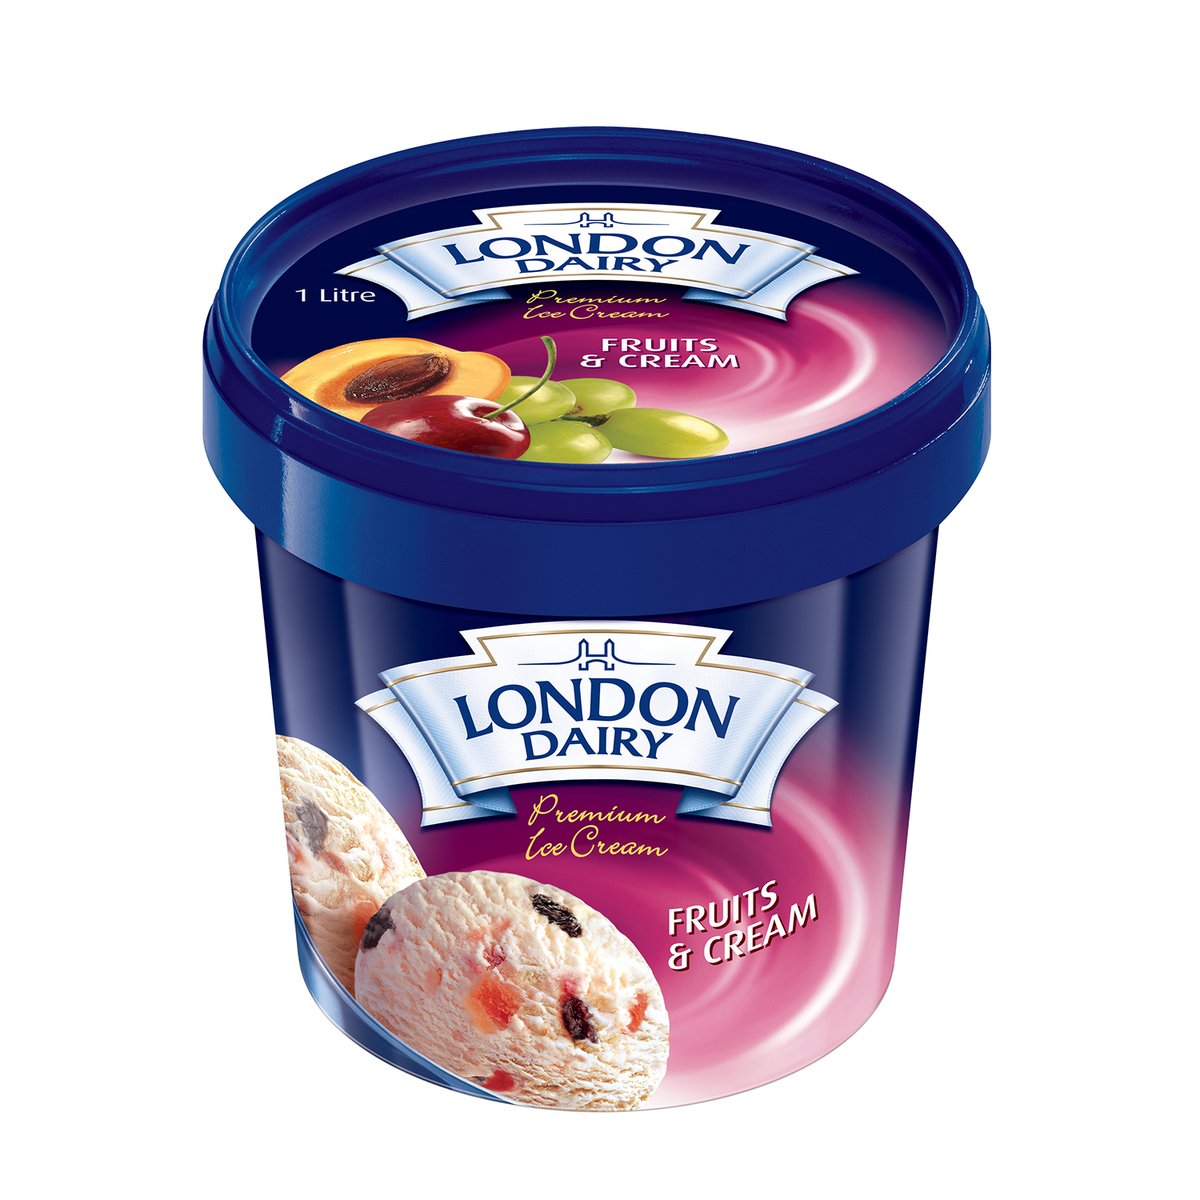 London Dairy Fruits & Cream Ice Cream 1 Litre